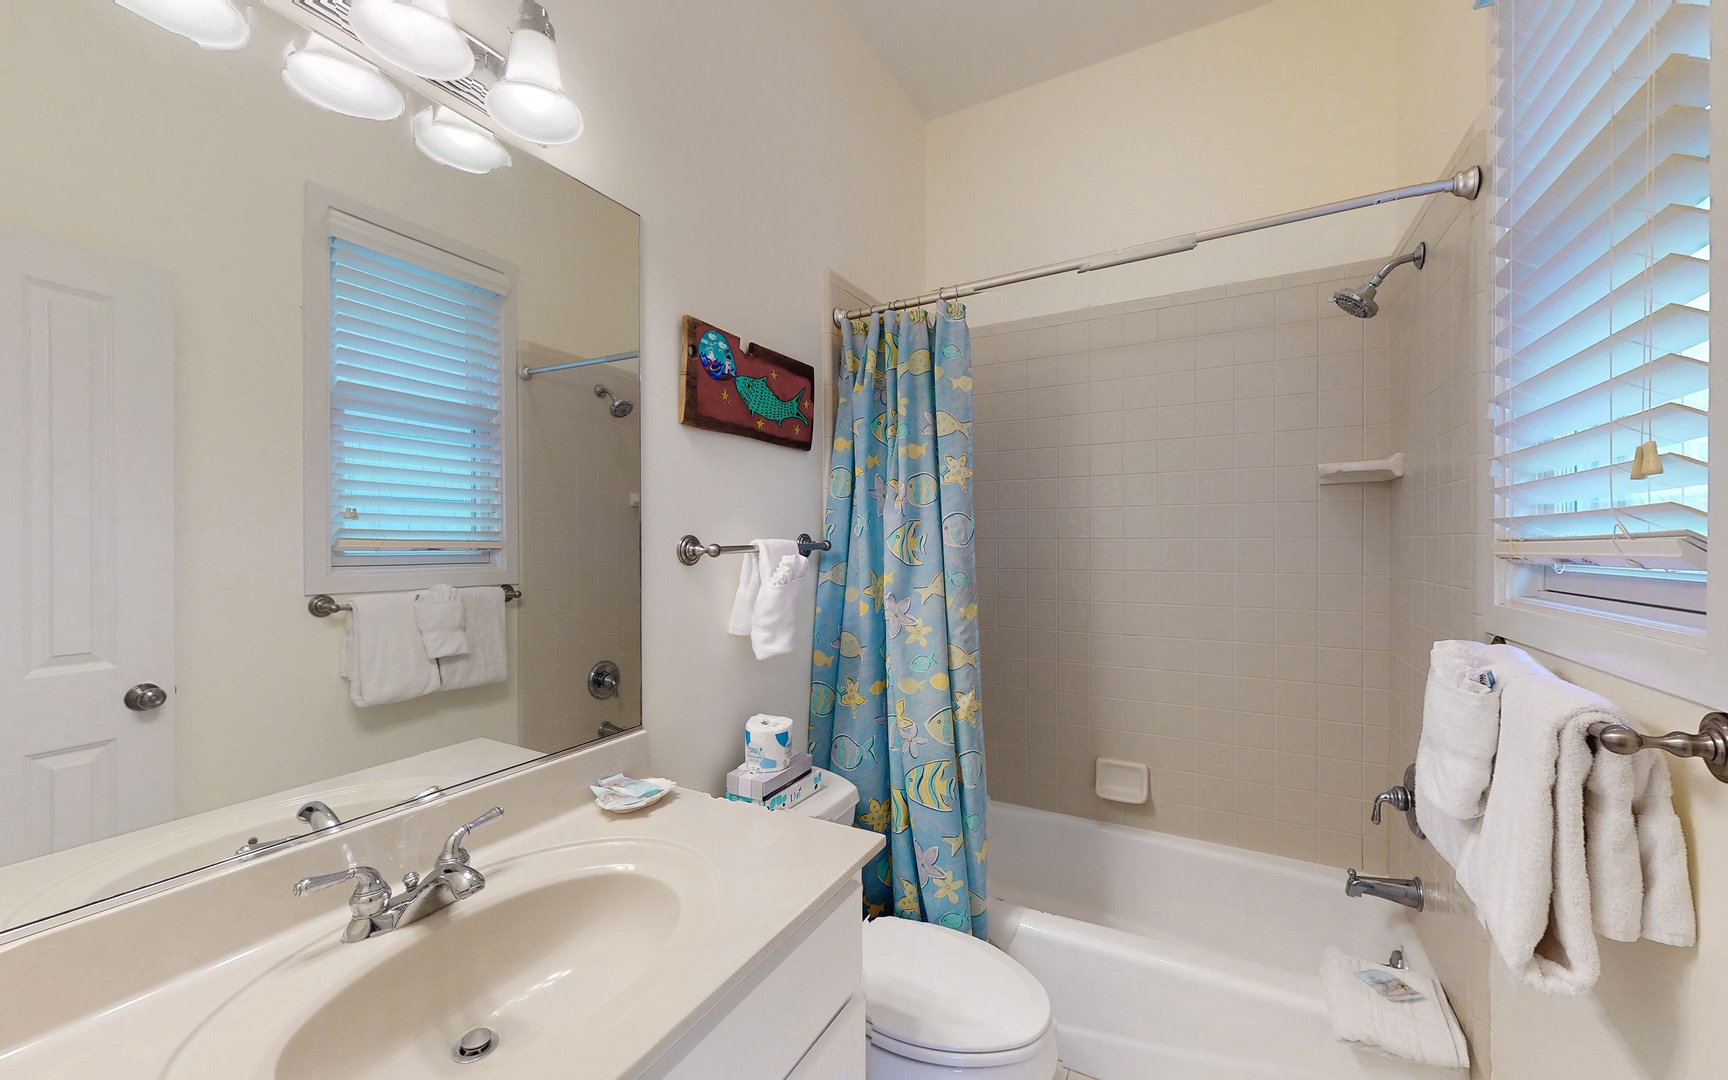 Upstairs, Bathroom 3 - Tub/Shower Combo